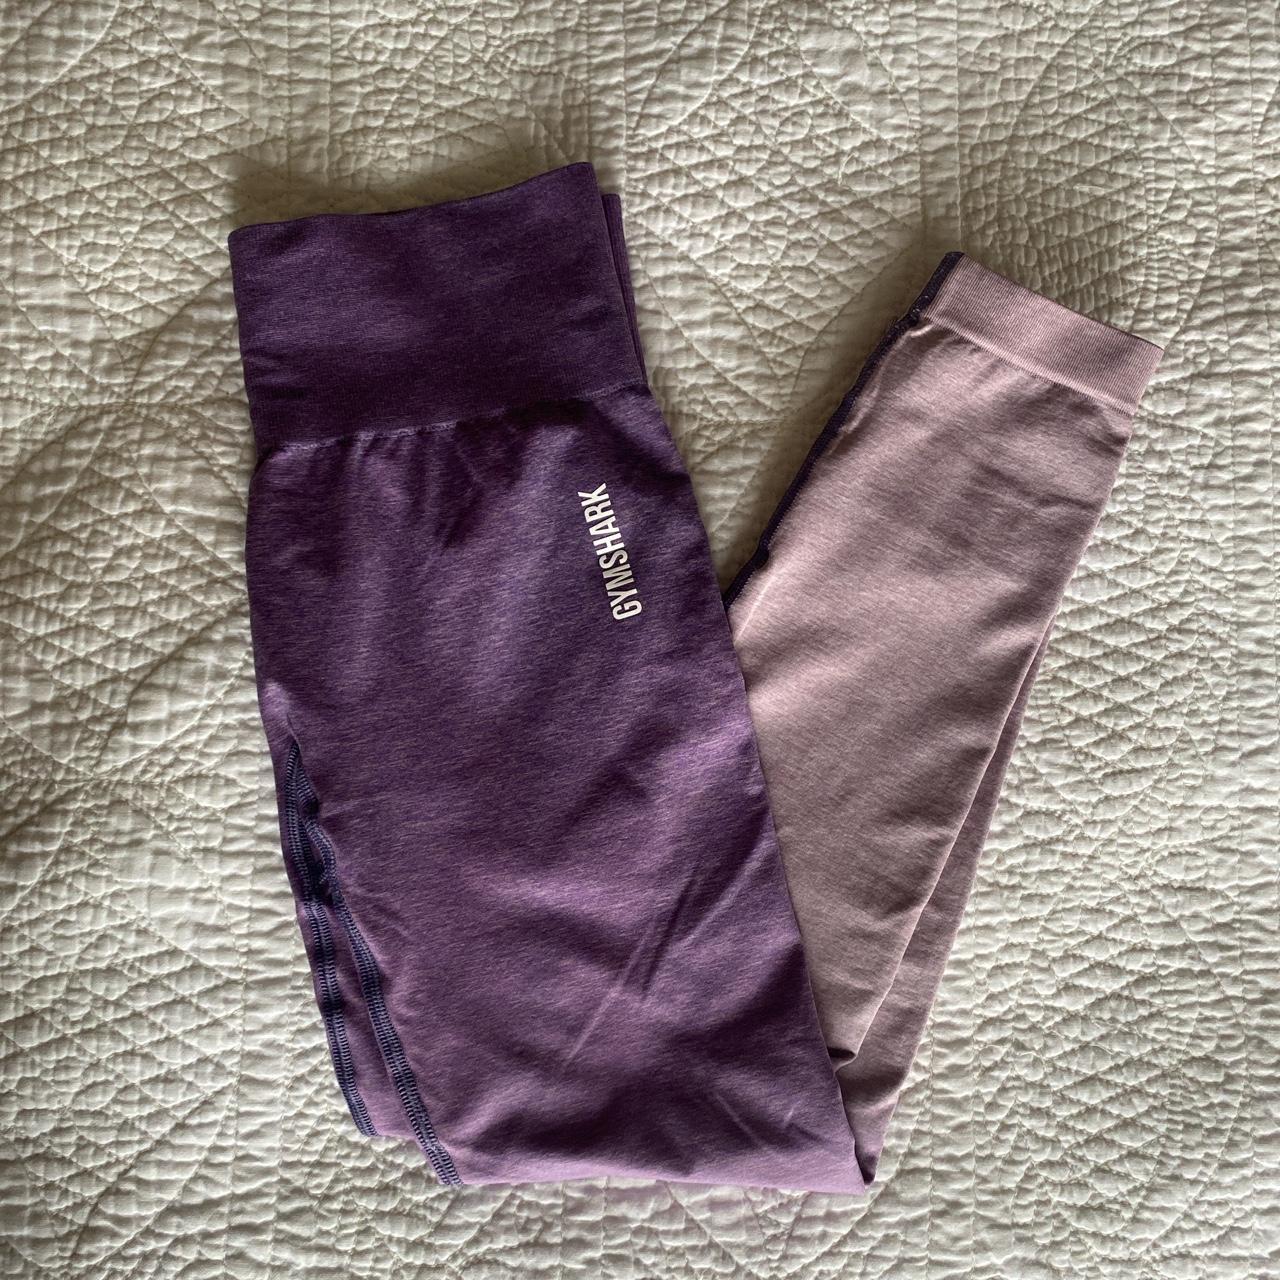 Gymshark Adapt Ombre Seamless Leggings - Light Purple Marl/Purple